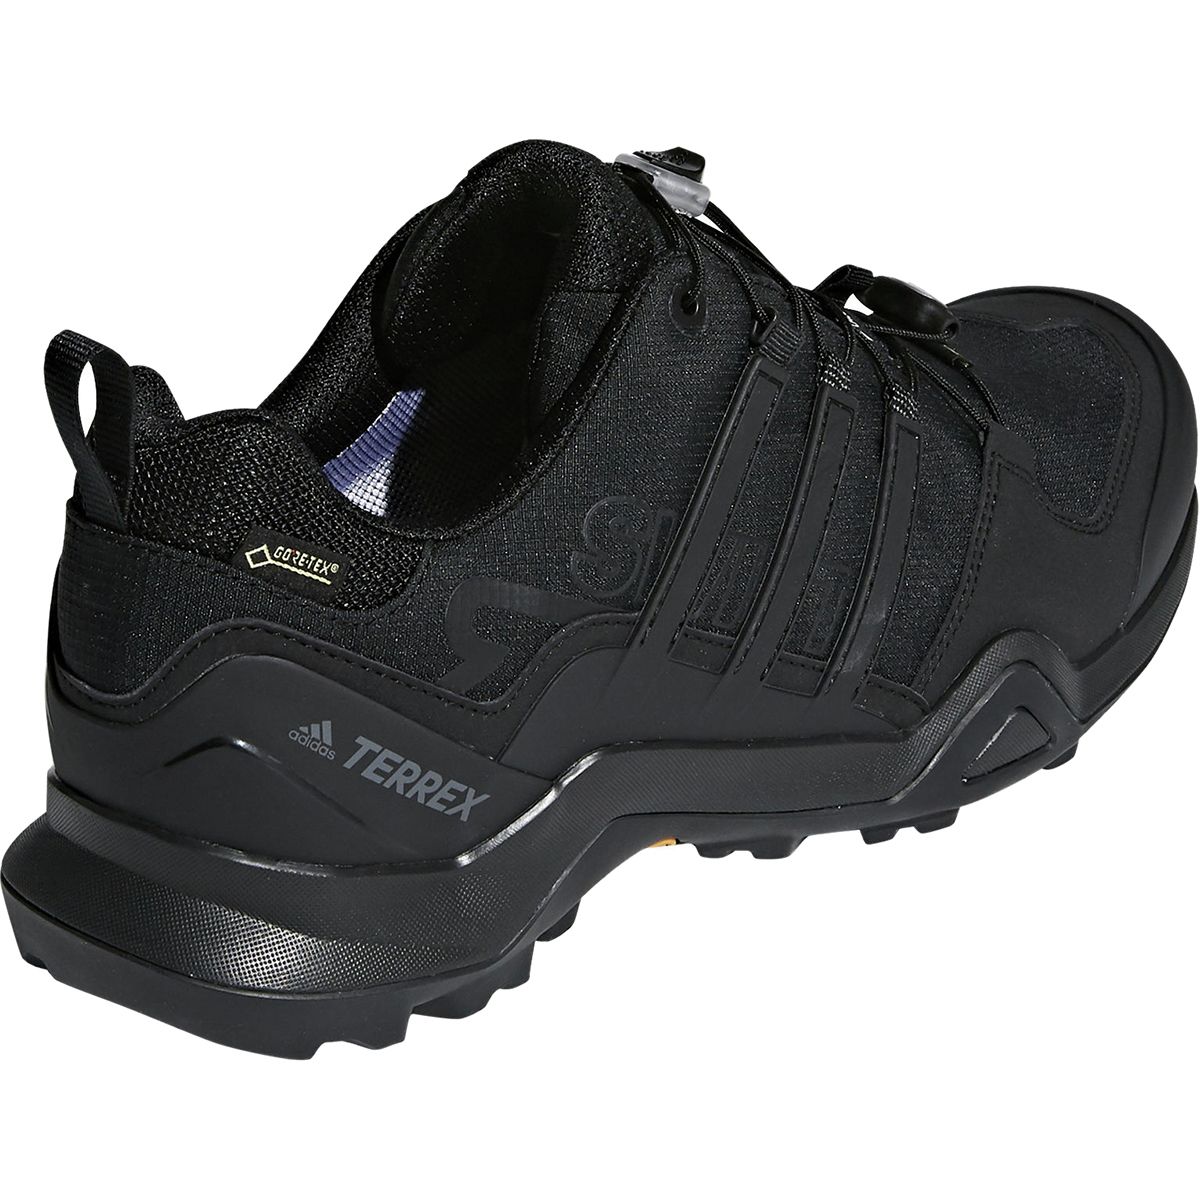 Adidas Outdoor Terrex Swift R2 GTX Hiking Shoe - Men's | eBay